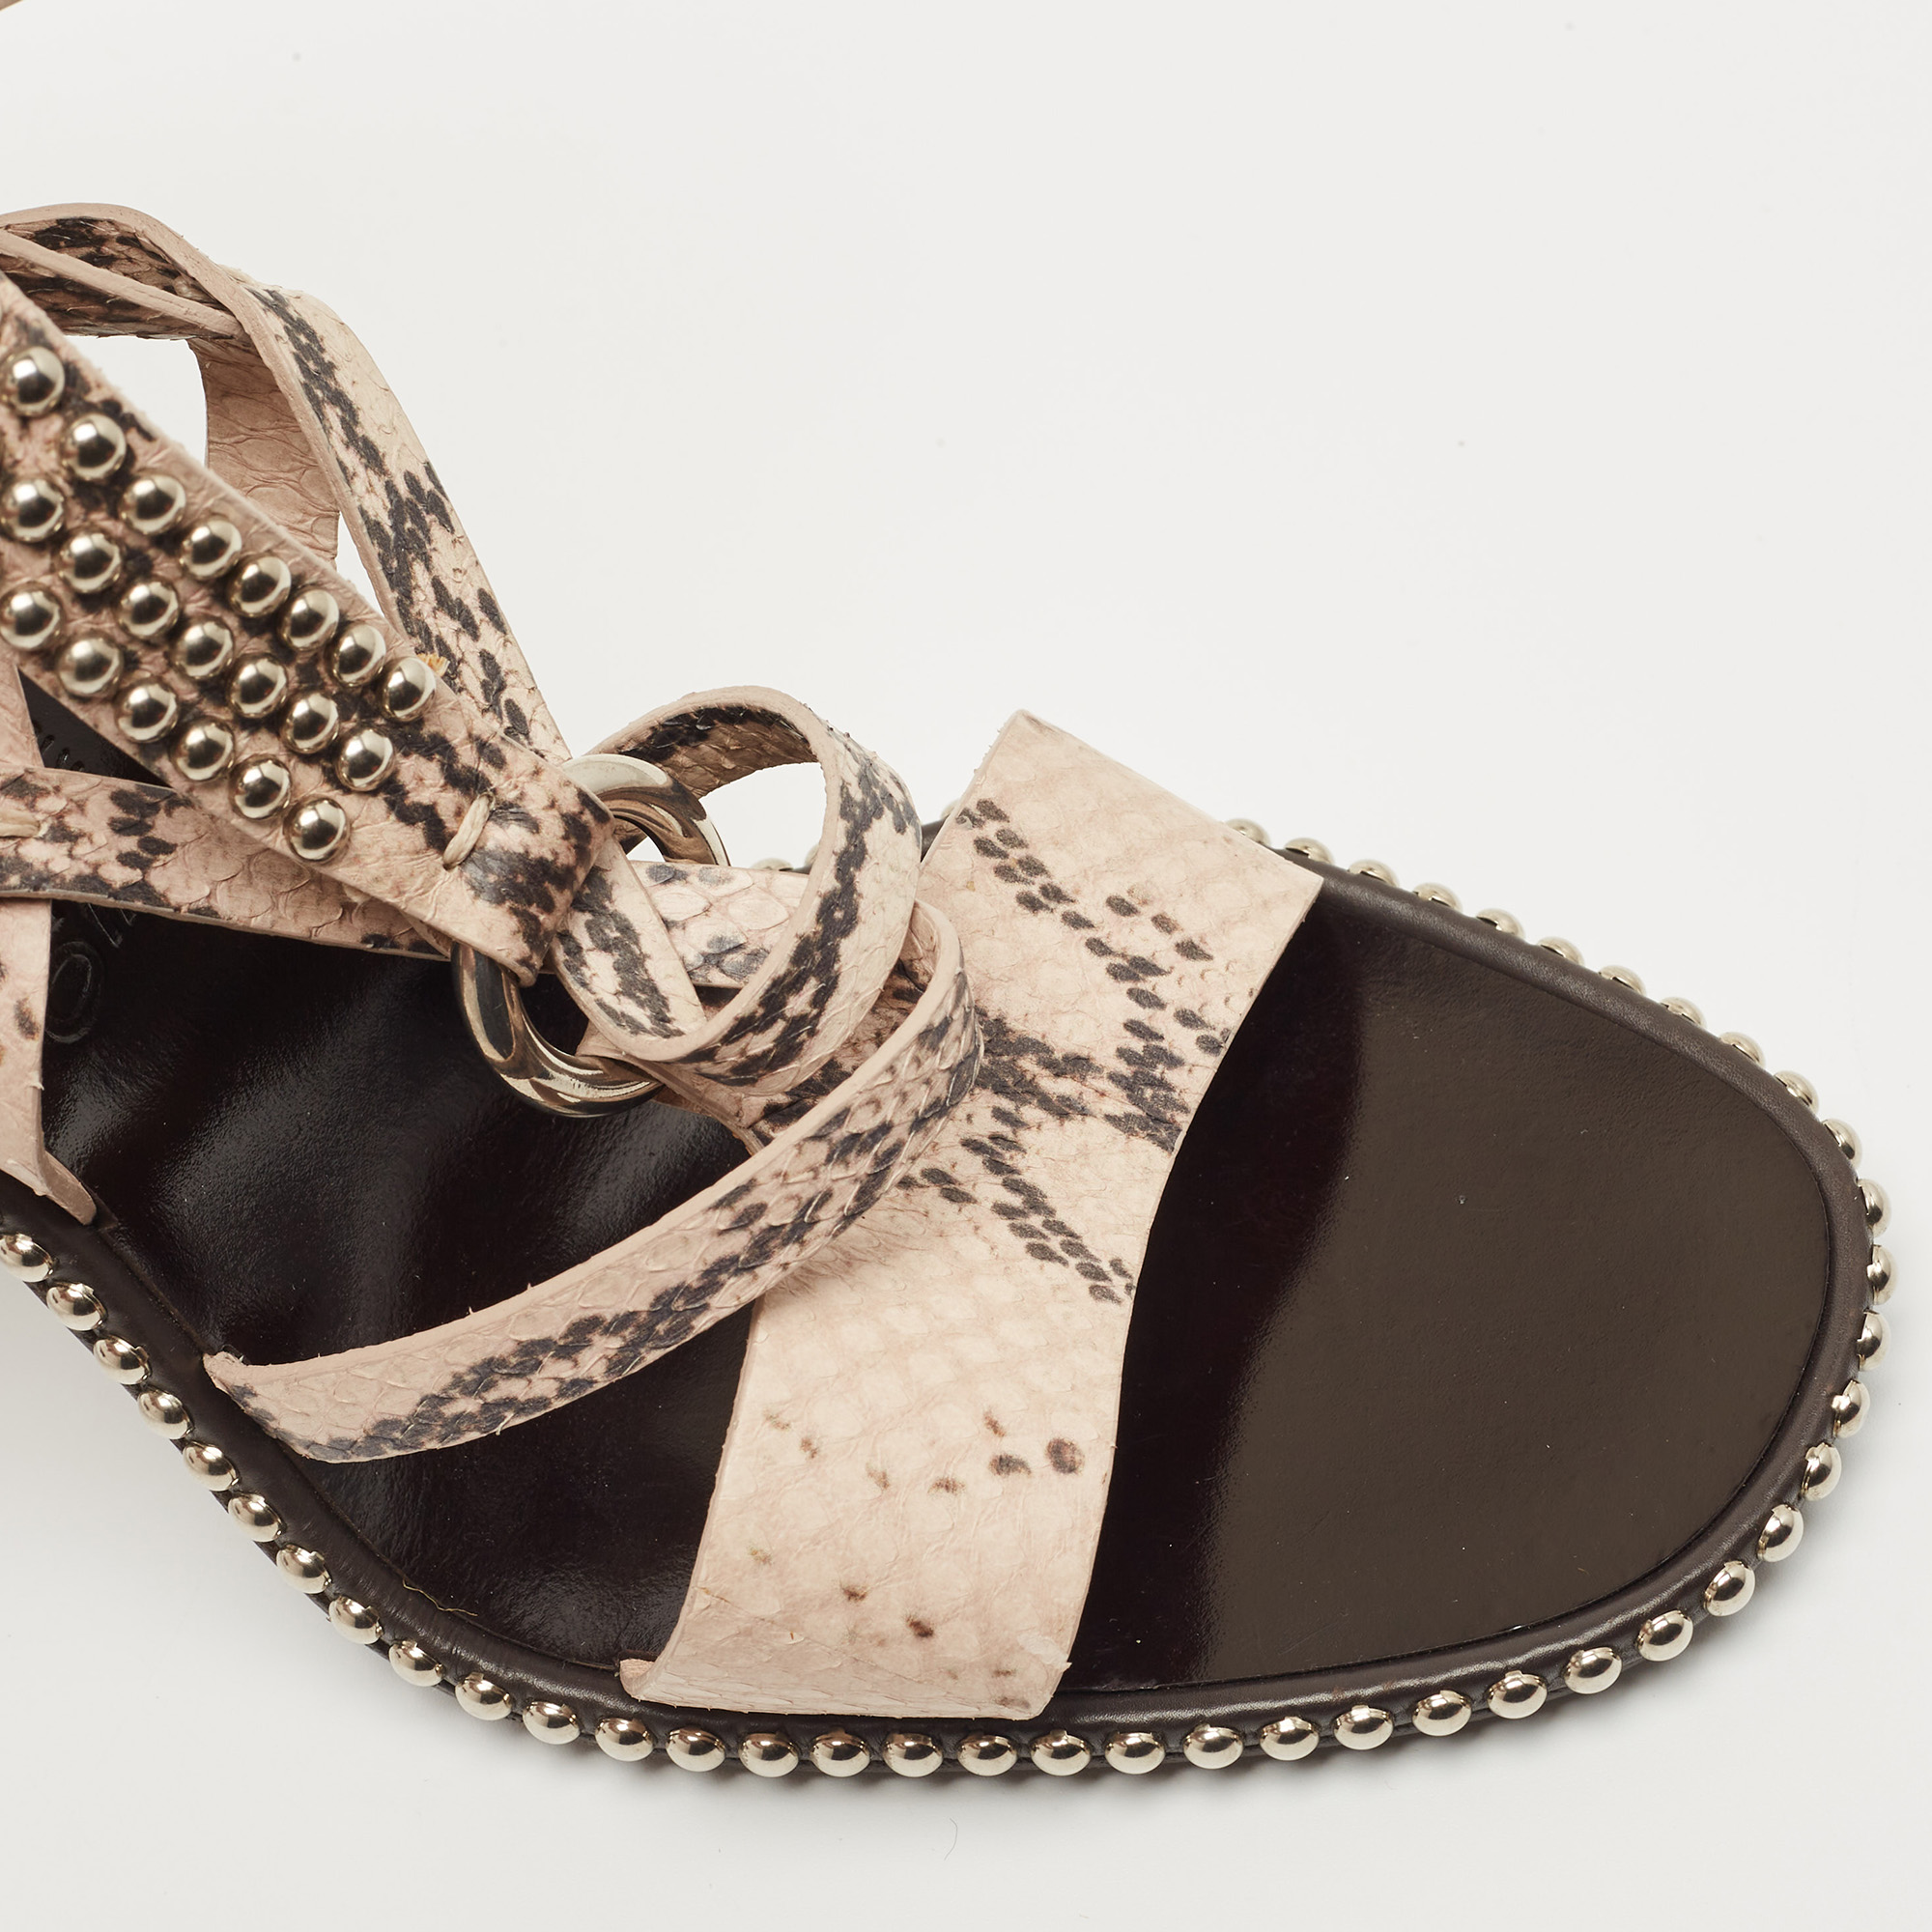 Salvatore Ferragamo Beige Python Leather Studded Ankle Cuff Sandals Size 41